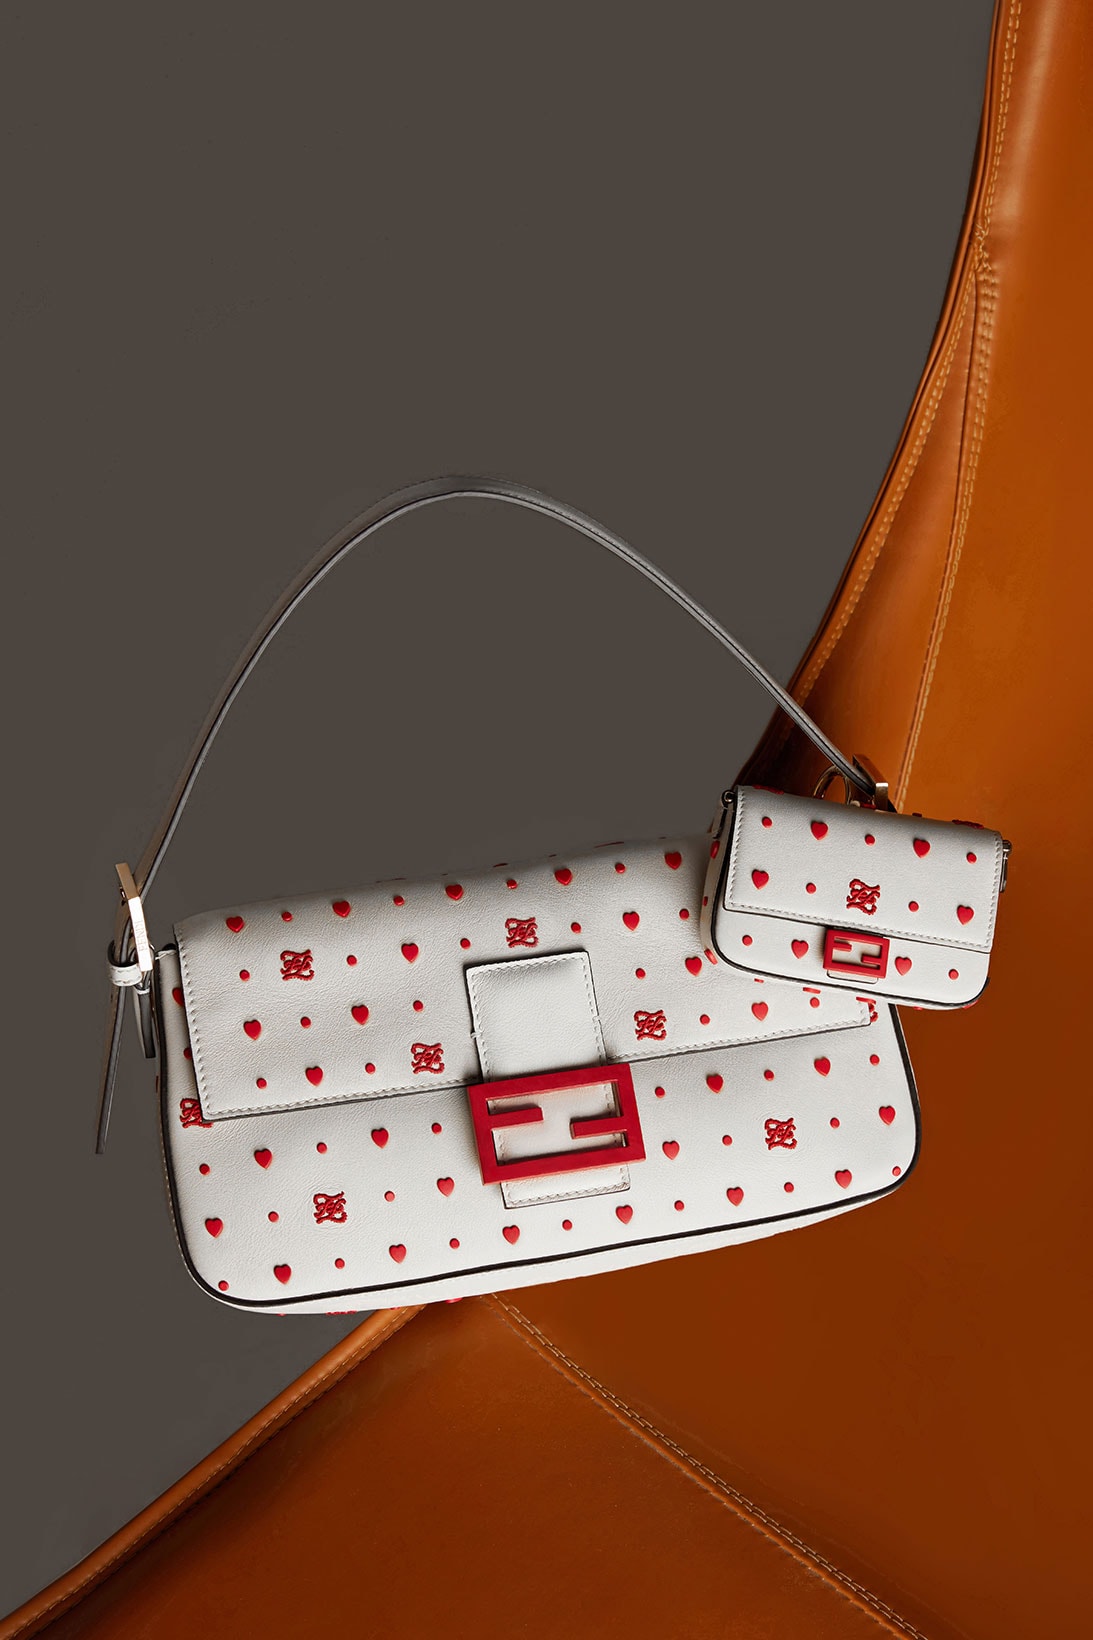 Fendi Peekaboo Handbag Capsule Collection